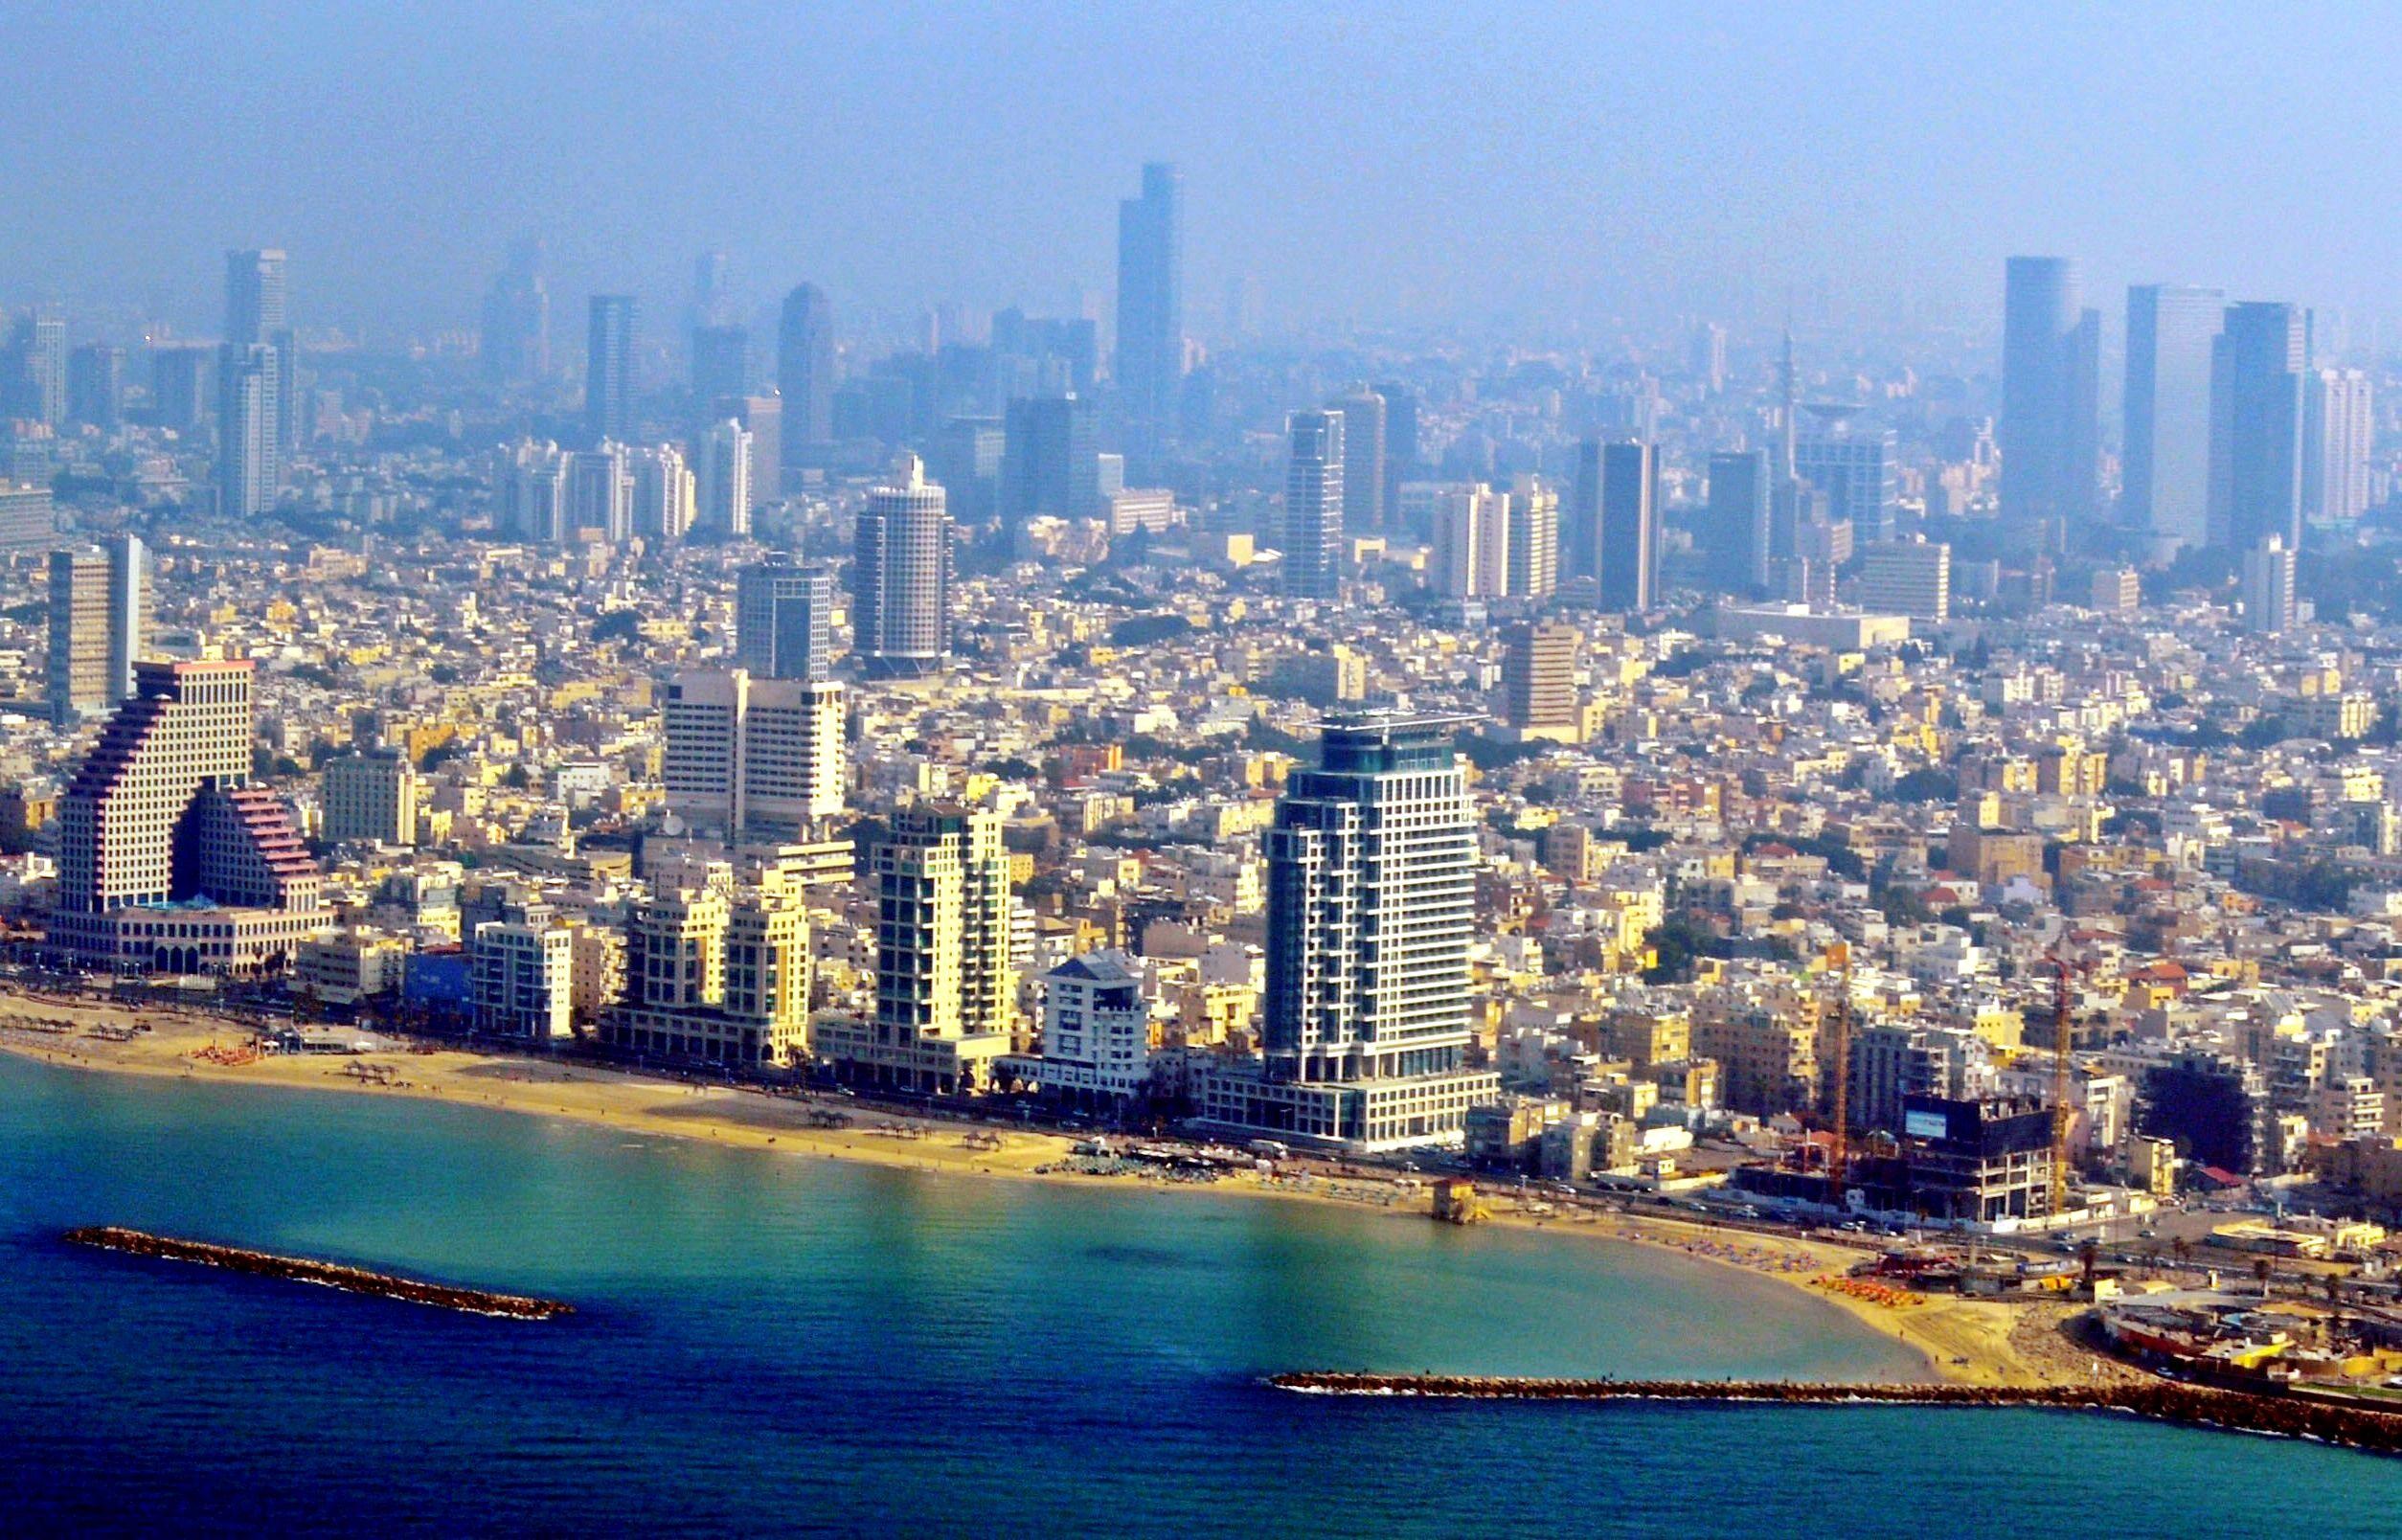 Tel Aviv Wallpaper Image Photo Picture Background